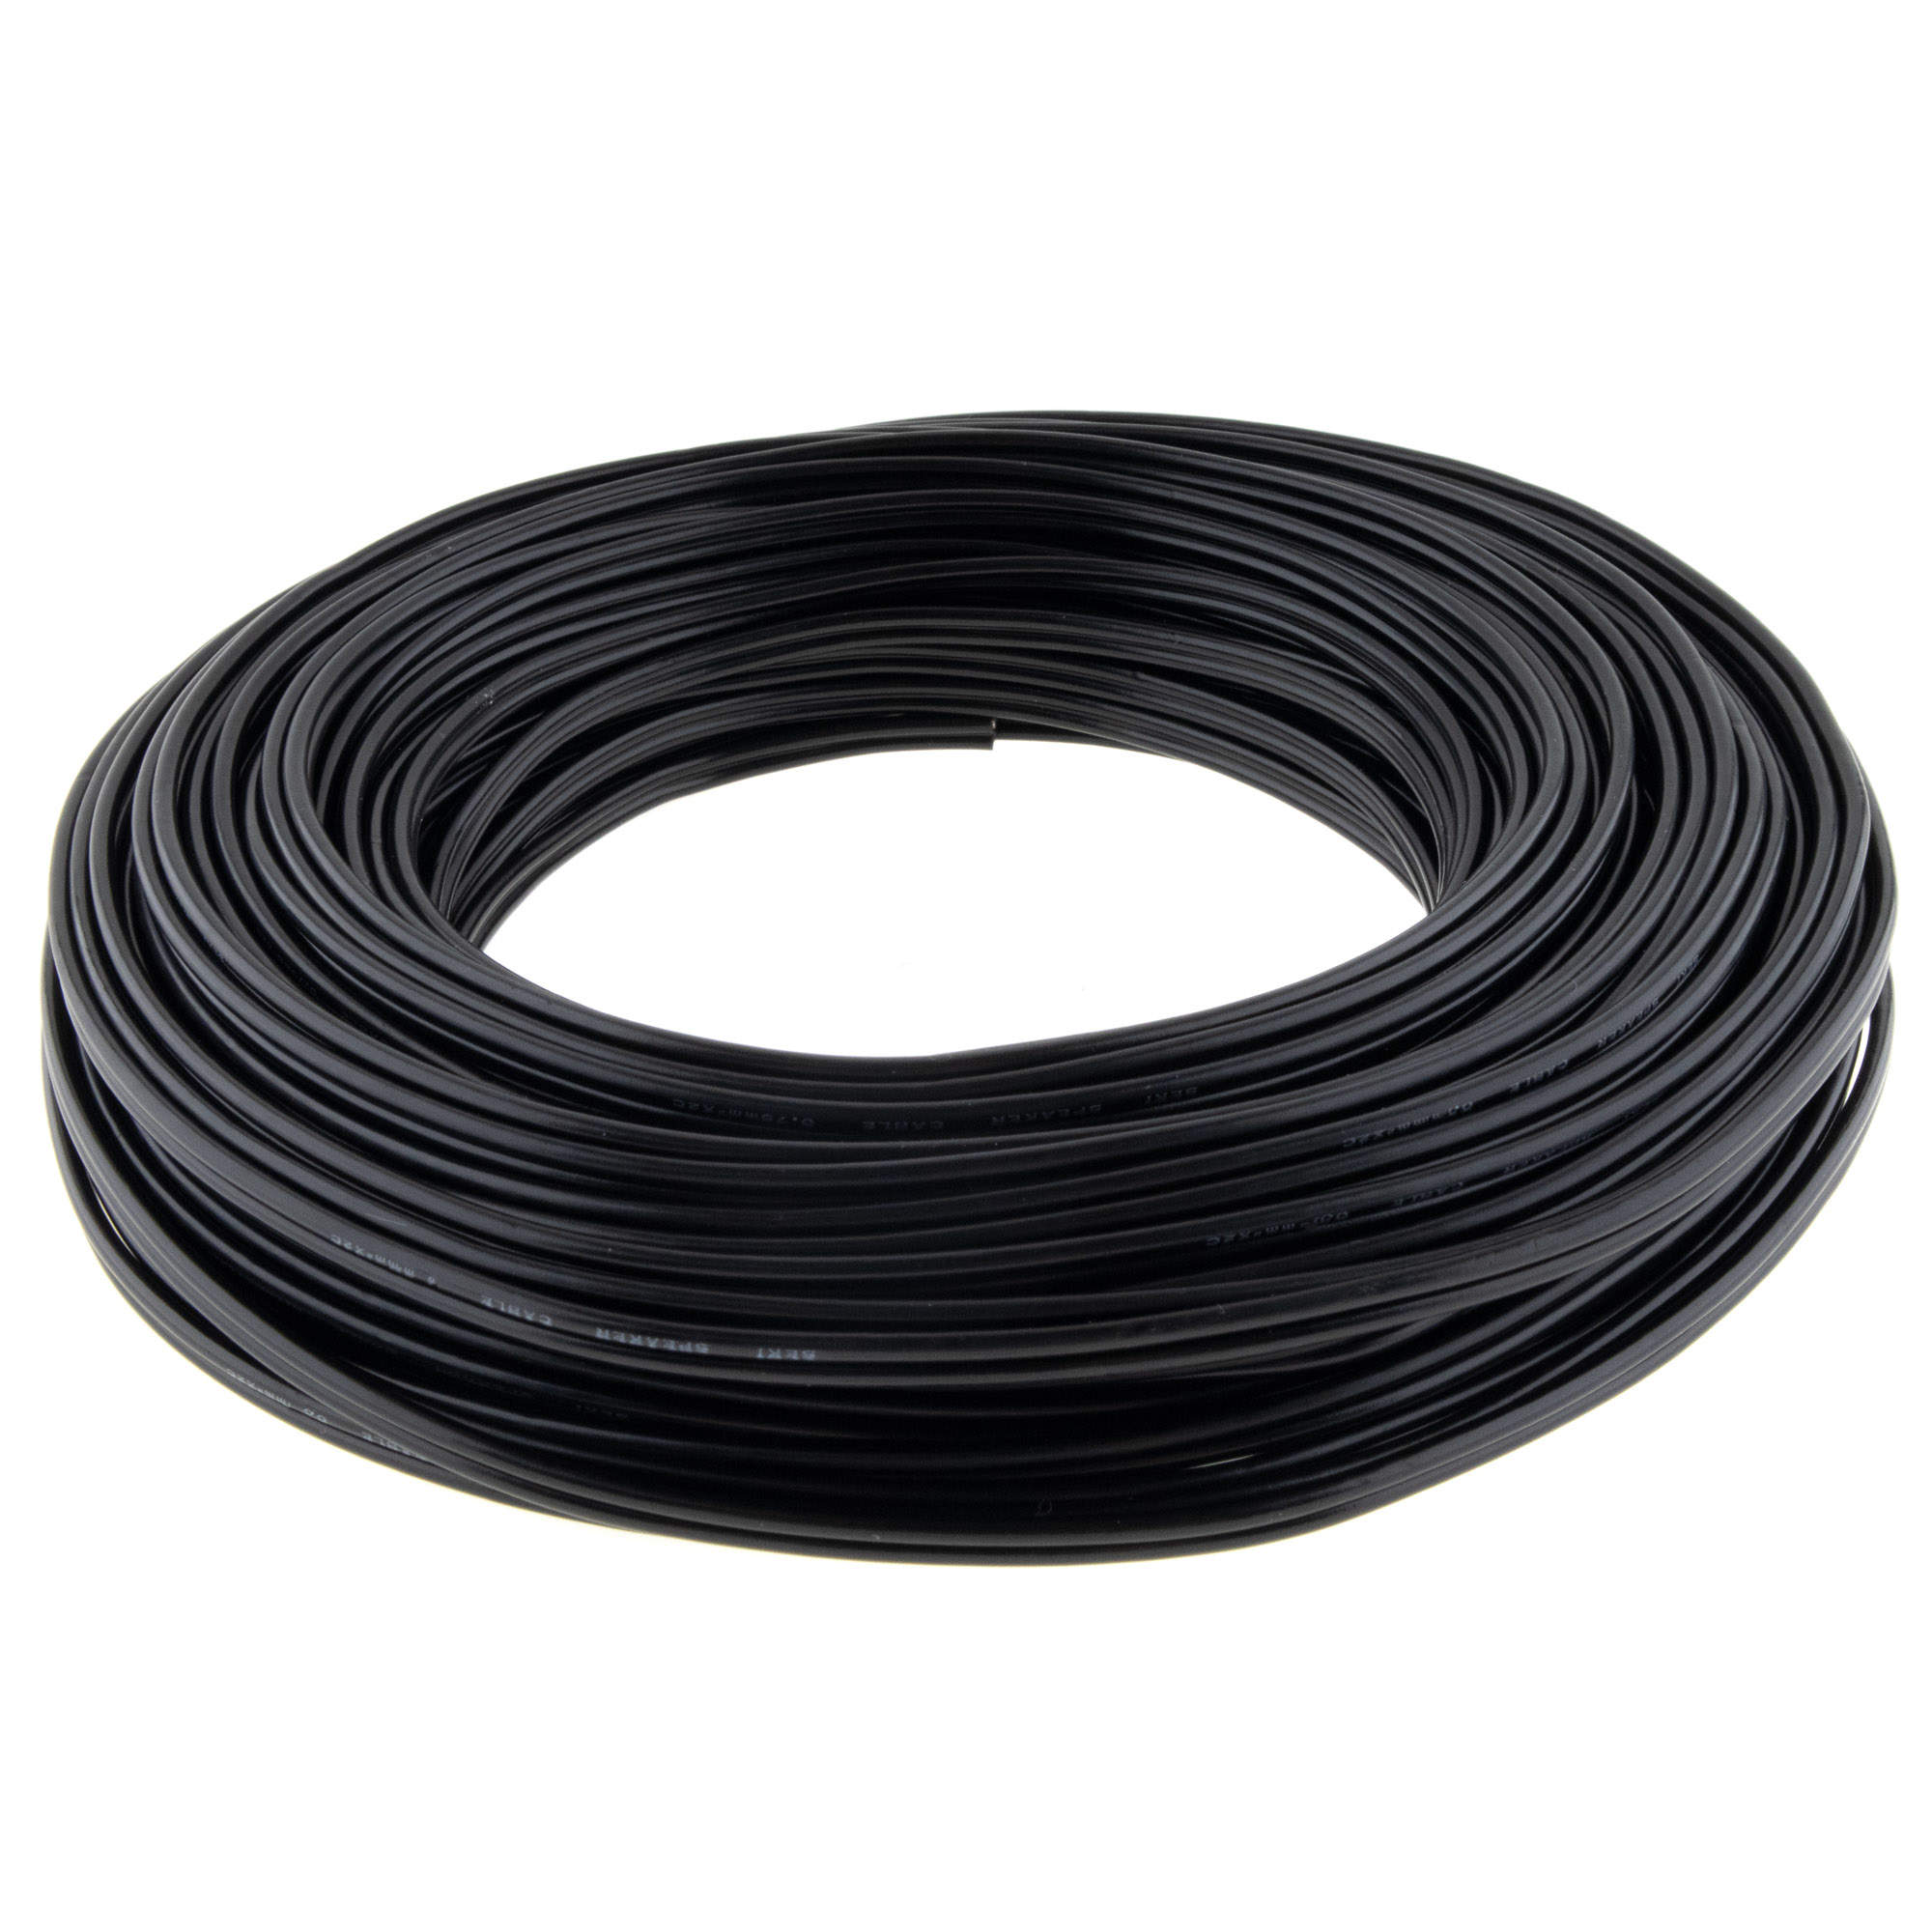 Loudspeaker cable black 25m 0.50mm